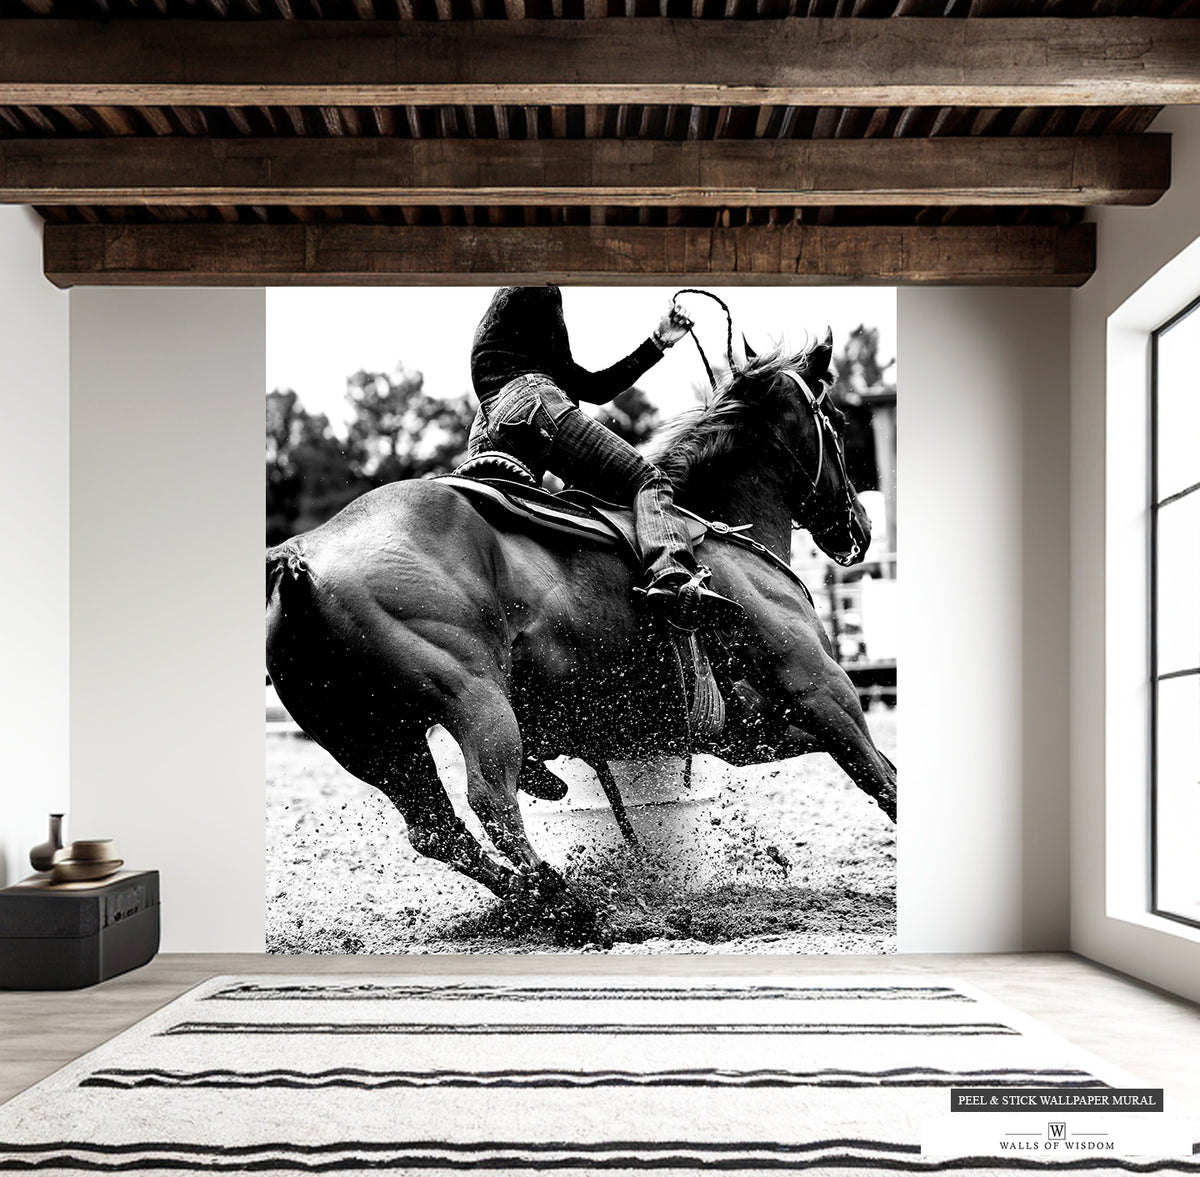 Dynamic rodeo scene wallpaper, showcasing female athleticism in barrel racing.